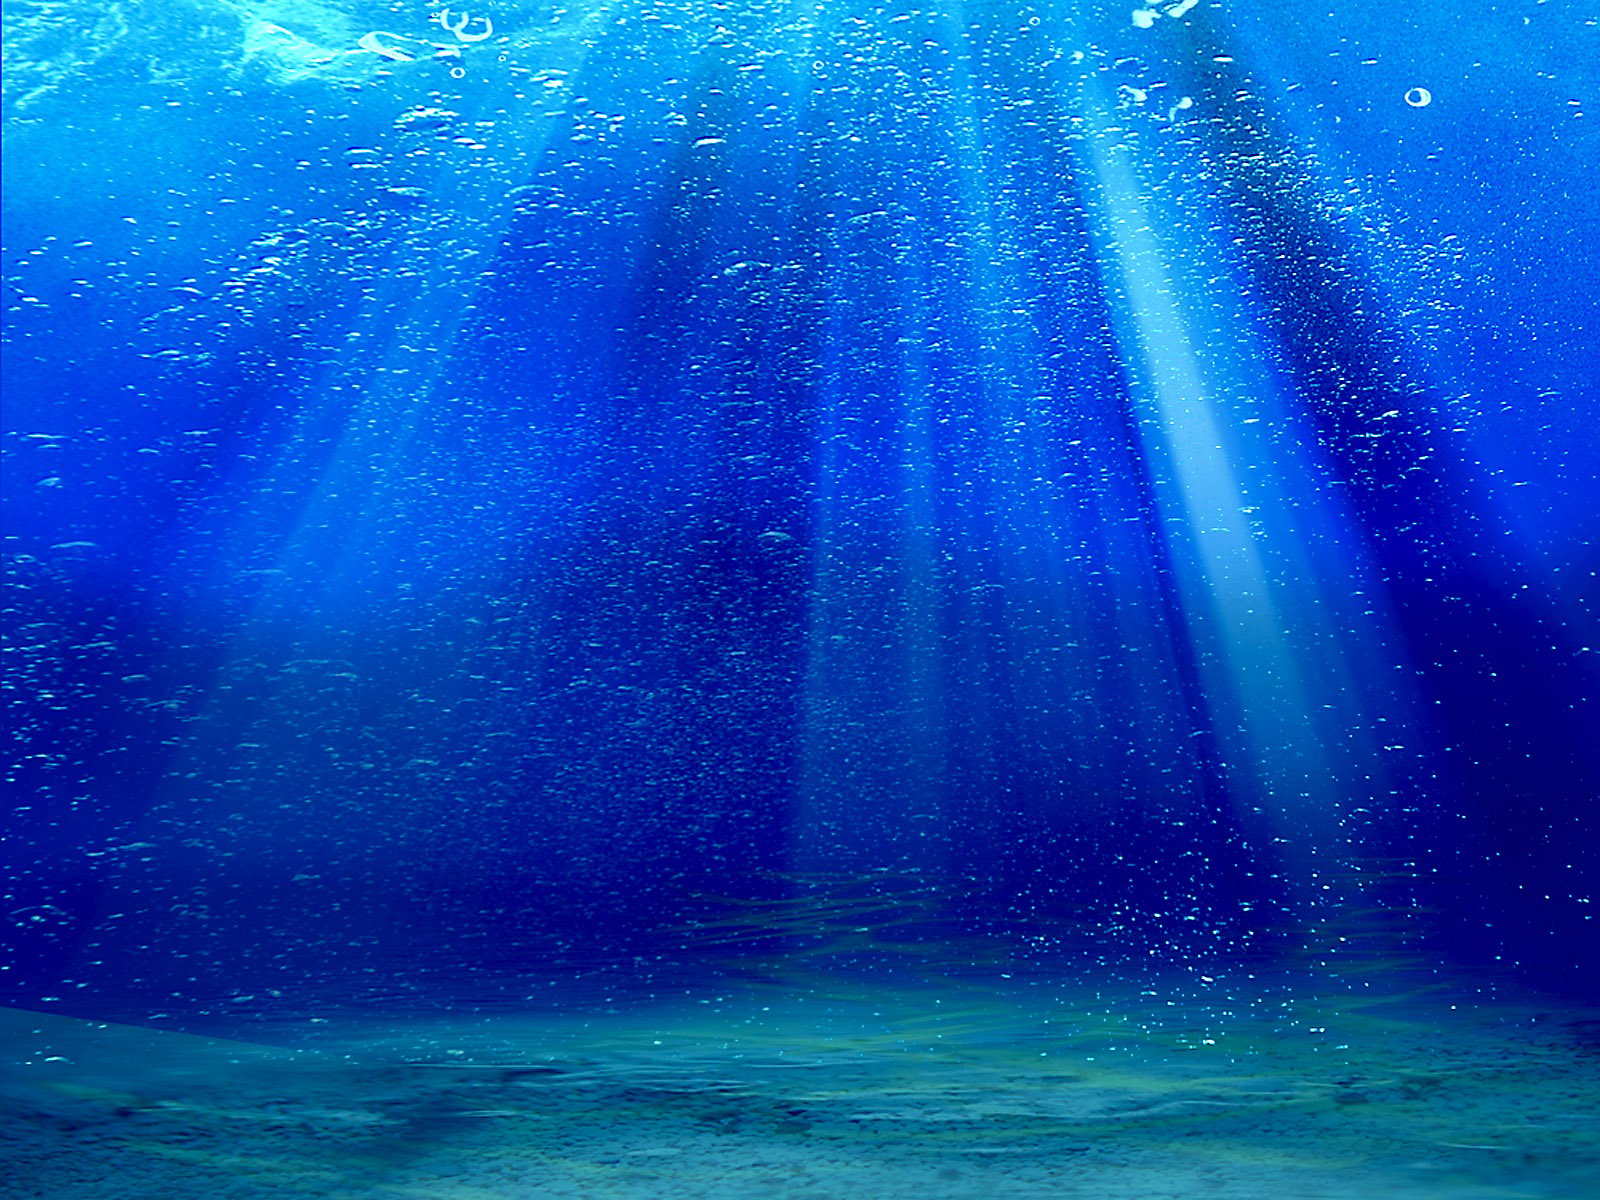 deep blue sea by mudukrull jpg 1600x1200